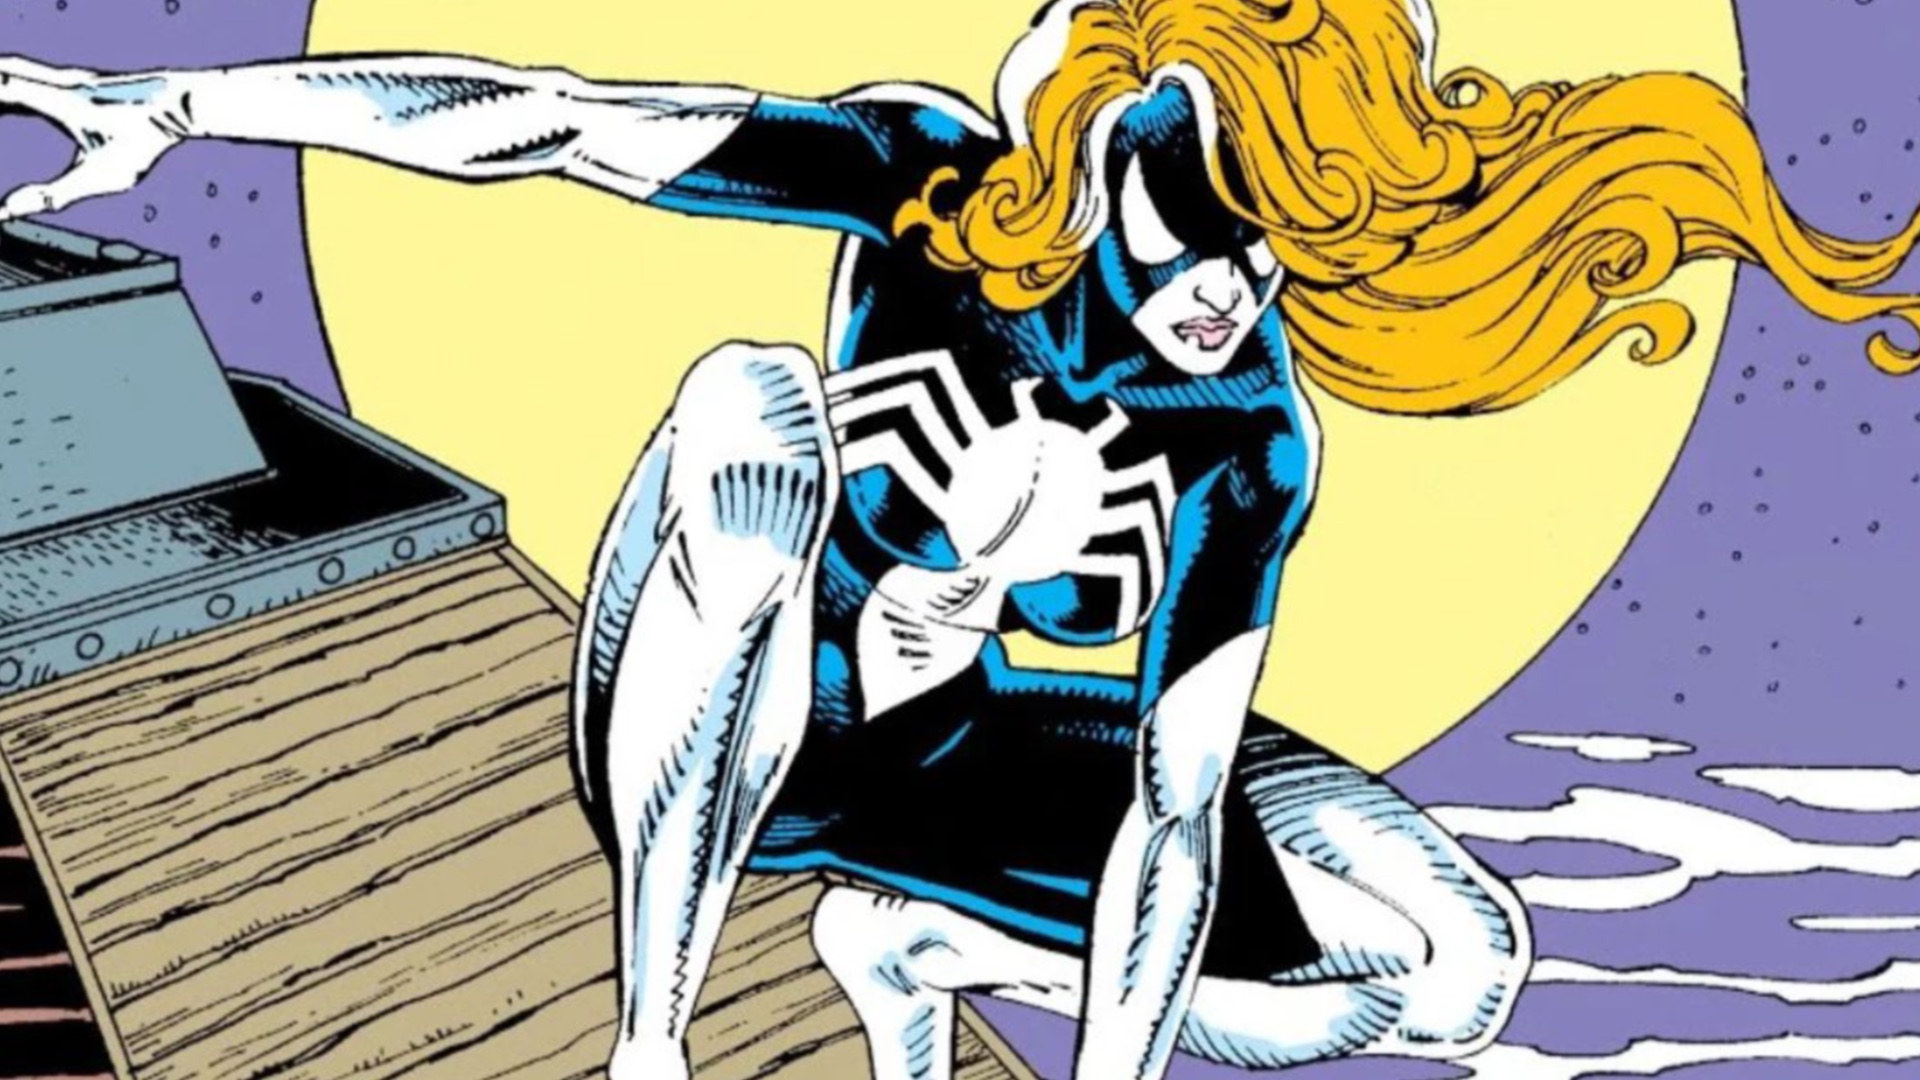 Julia Carpenter striking a signature Spider-Woman pose